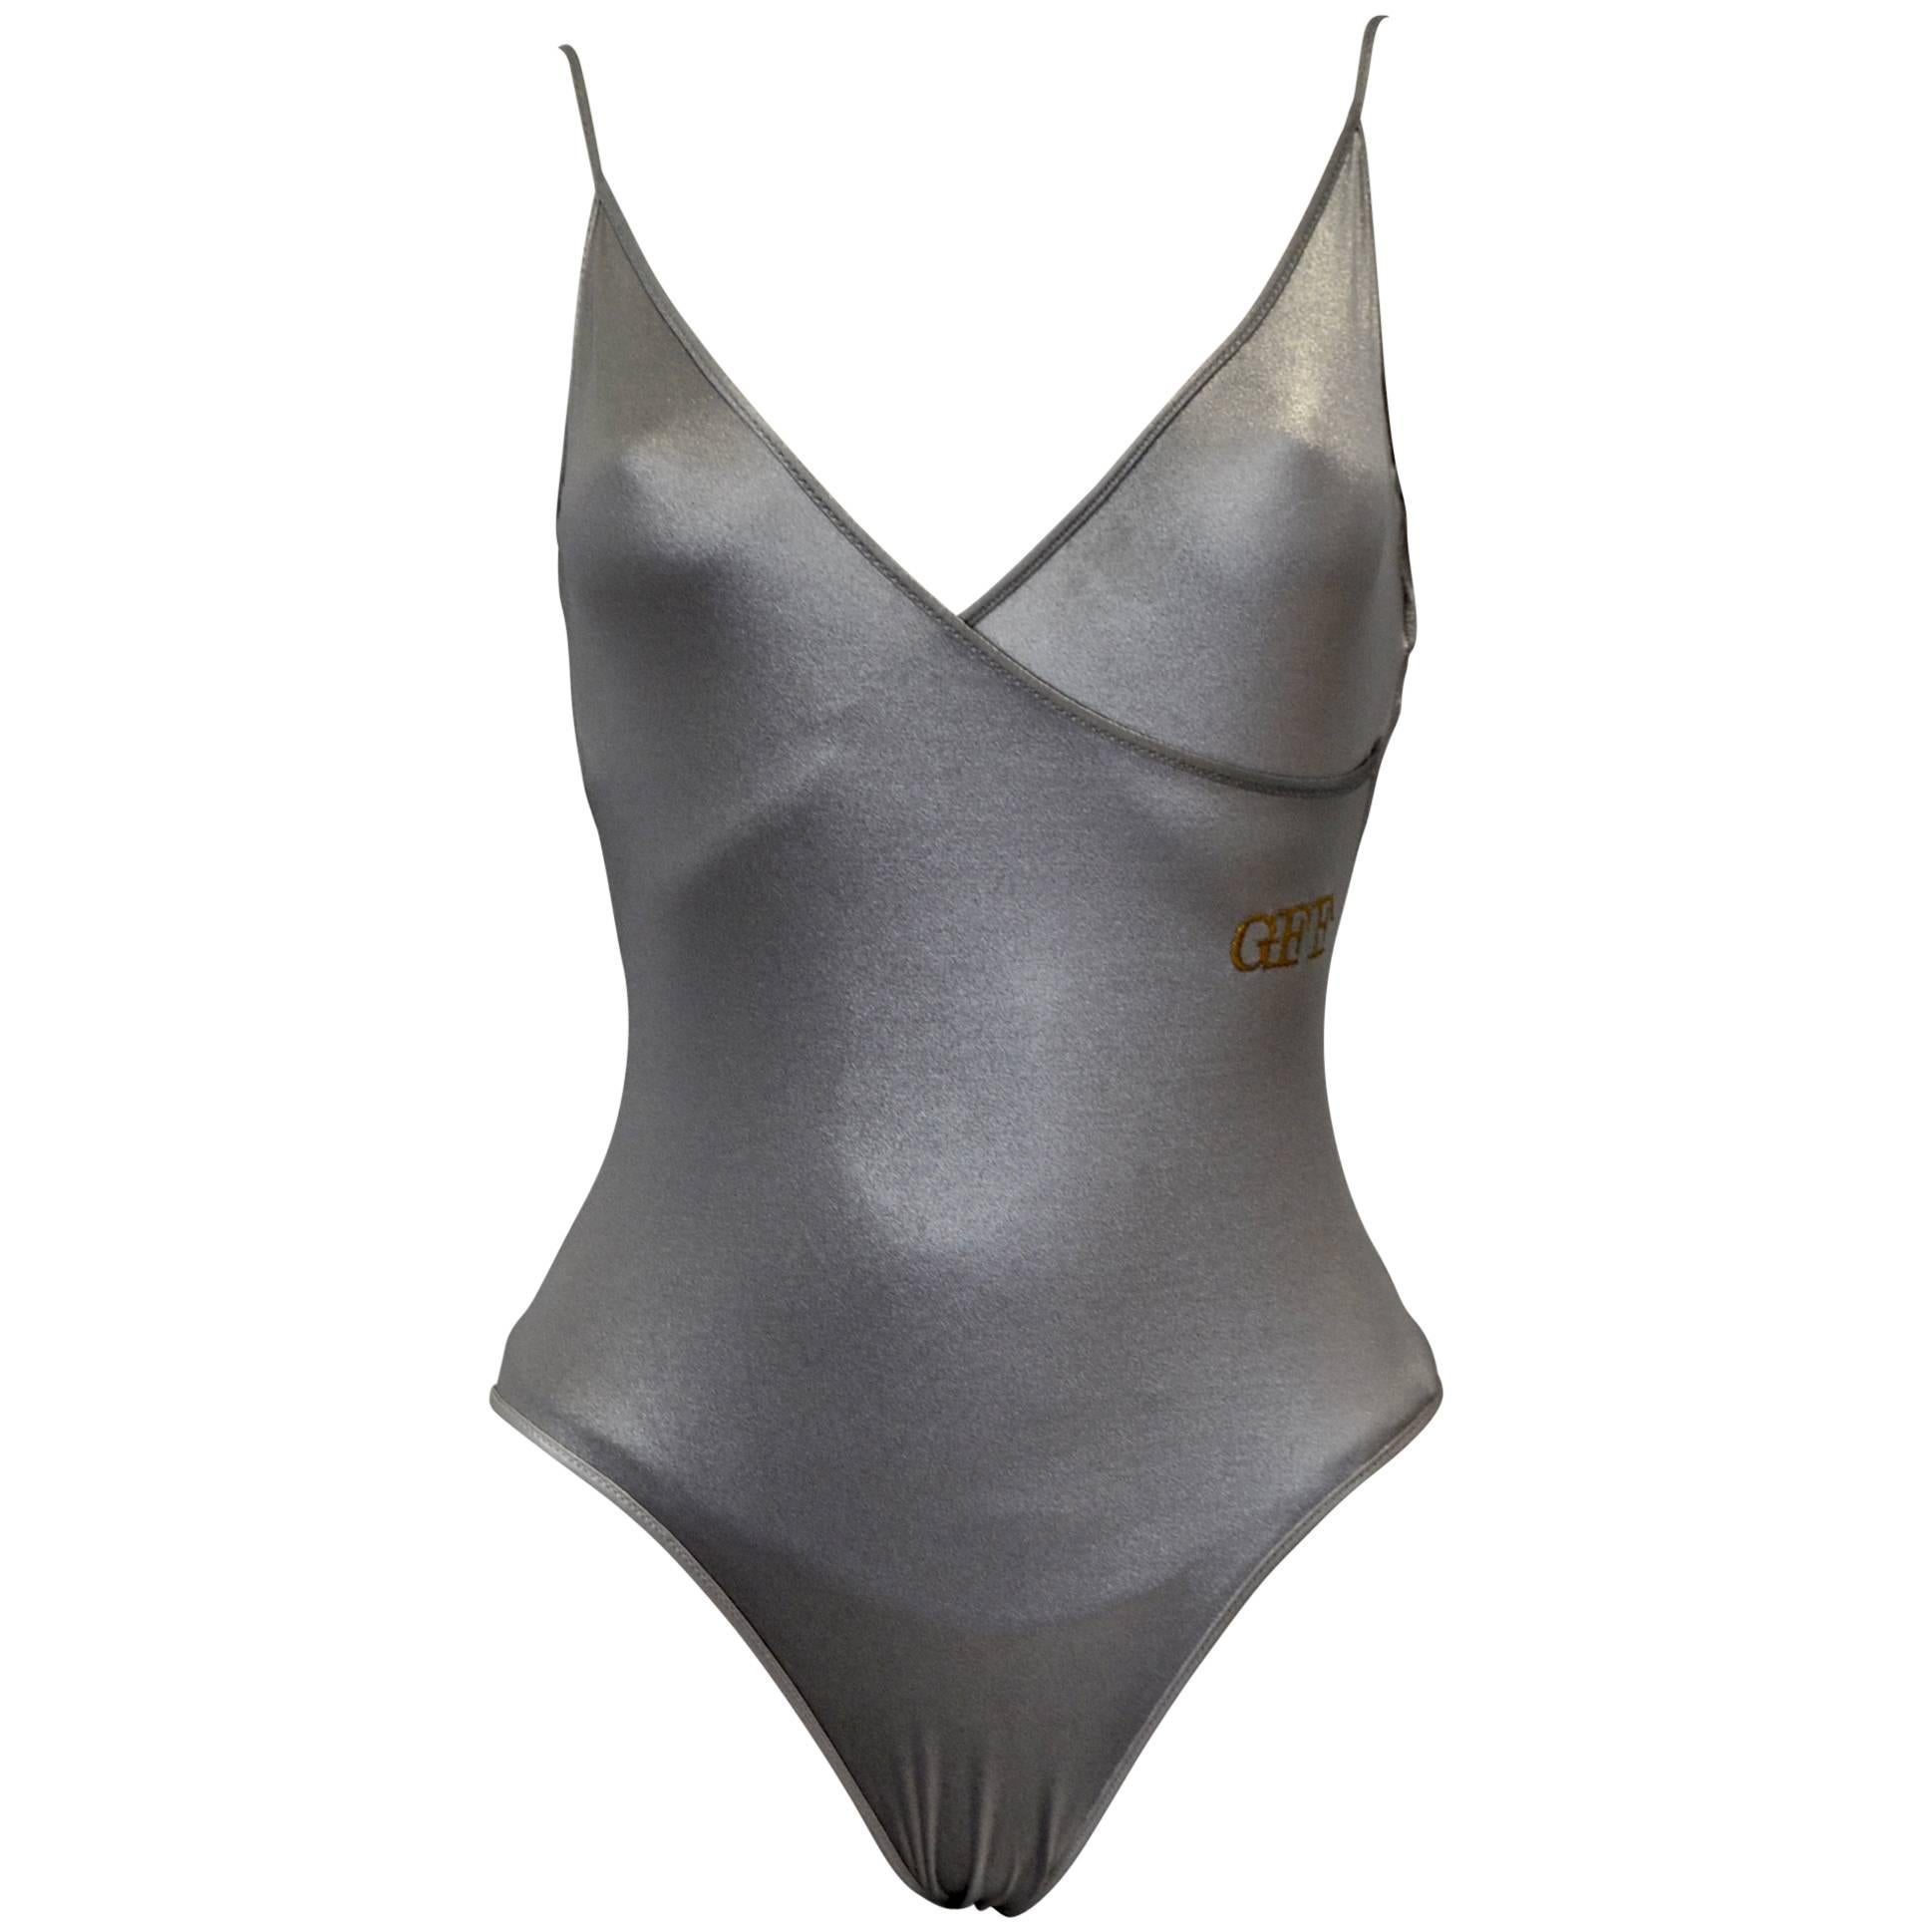 Stunning Silver Gianfranco Ferre Gold Monogram Swimsuit For Sale